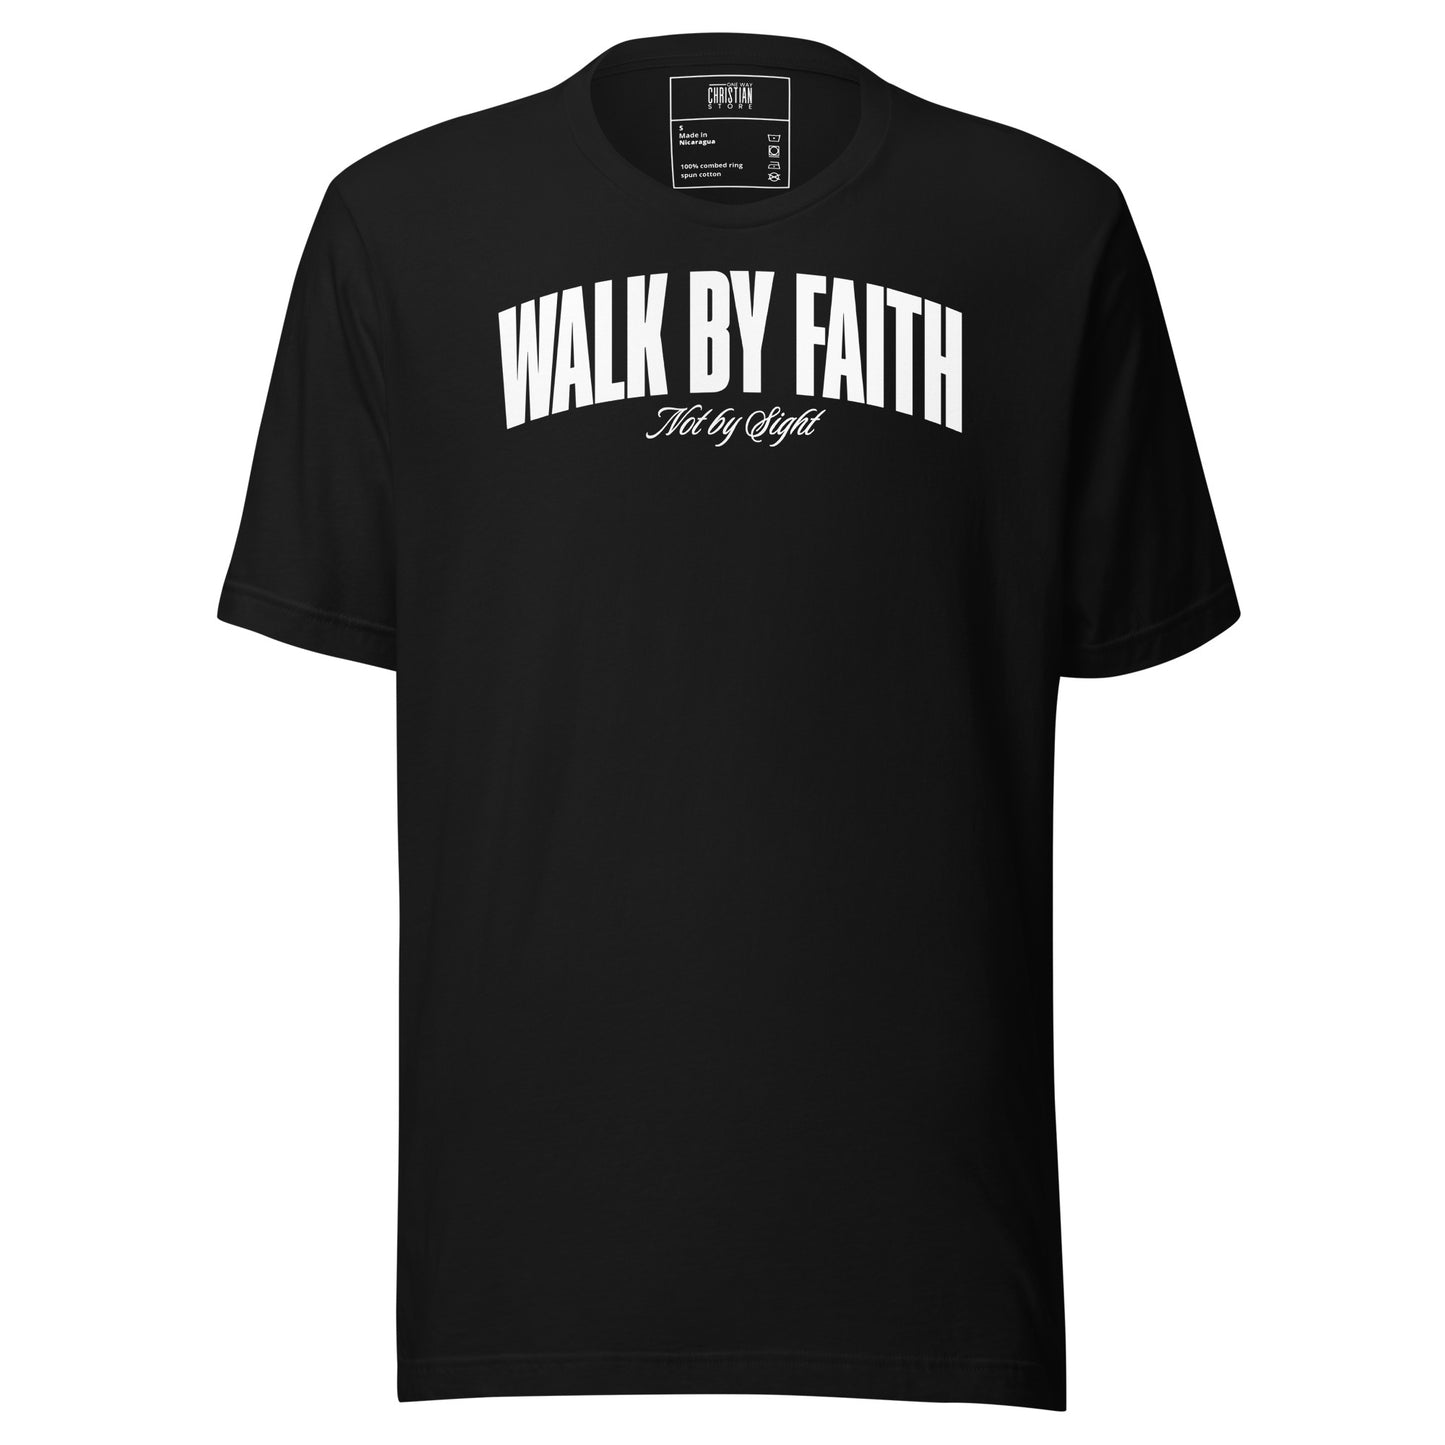 Christian t-shirts | One Way Christian Store